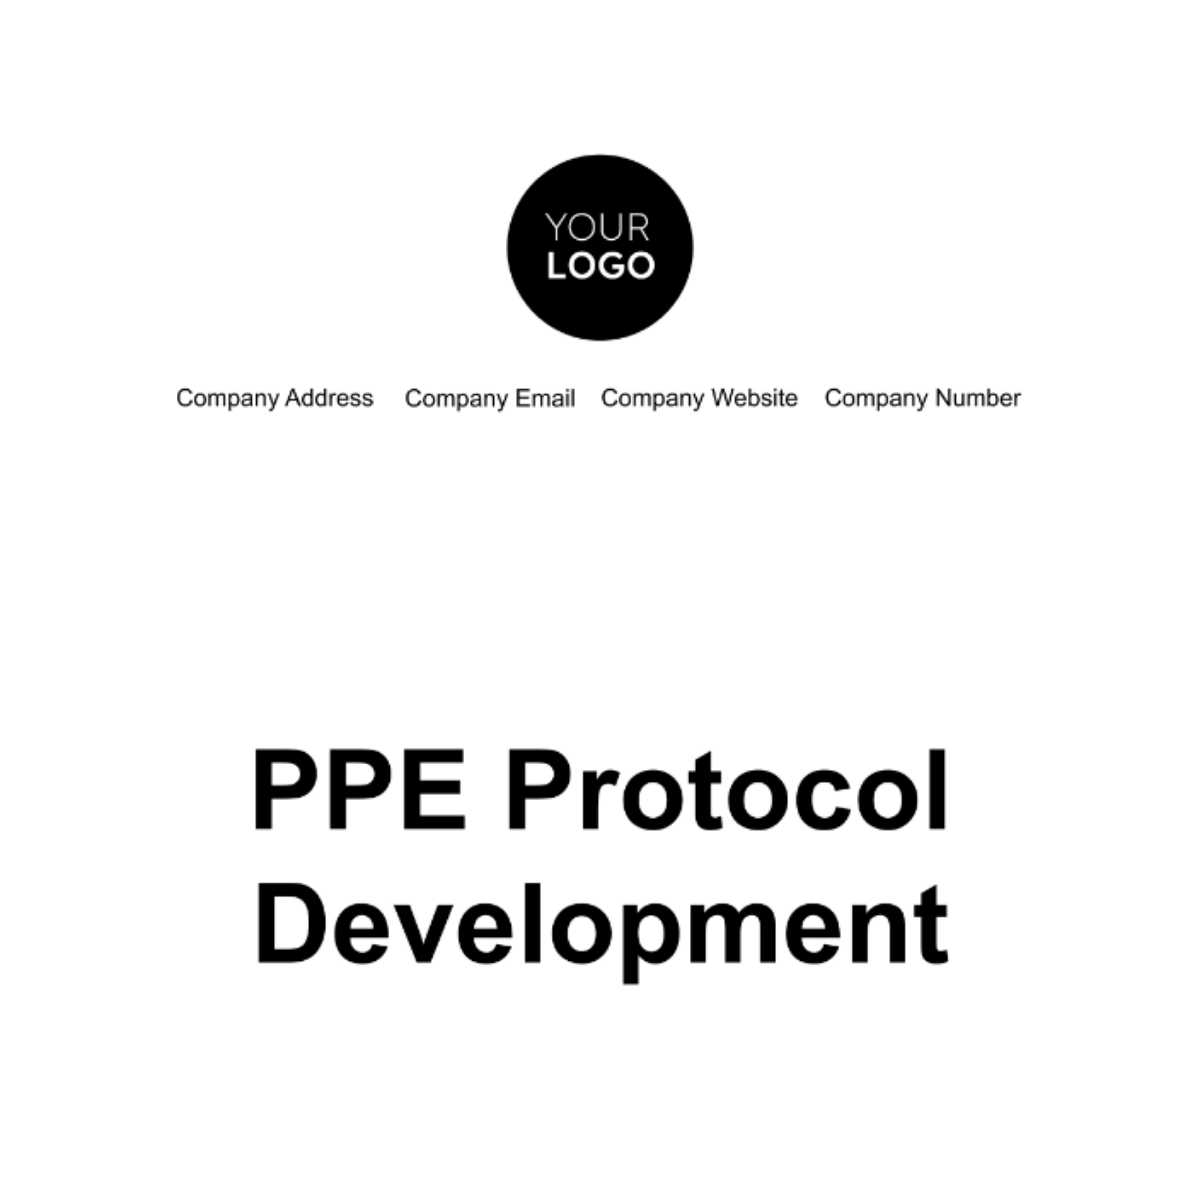 Free PPE Protocol Development Template